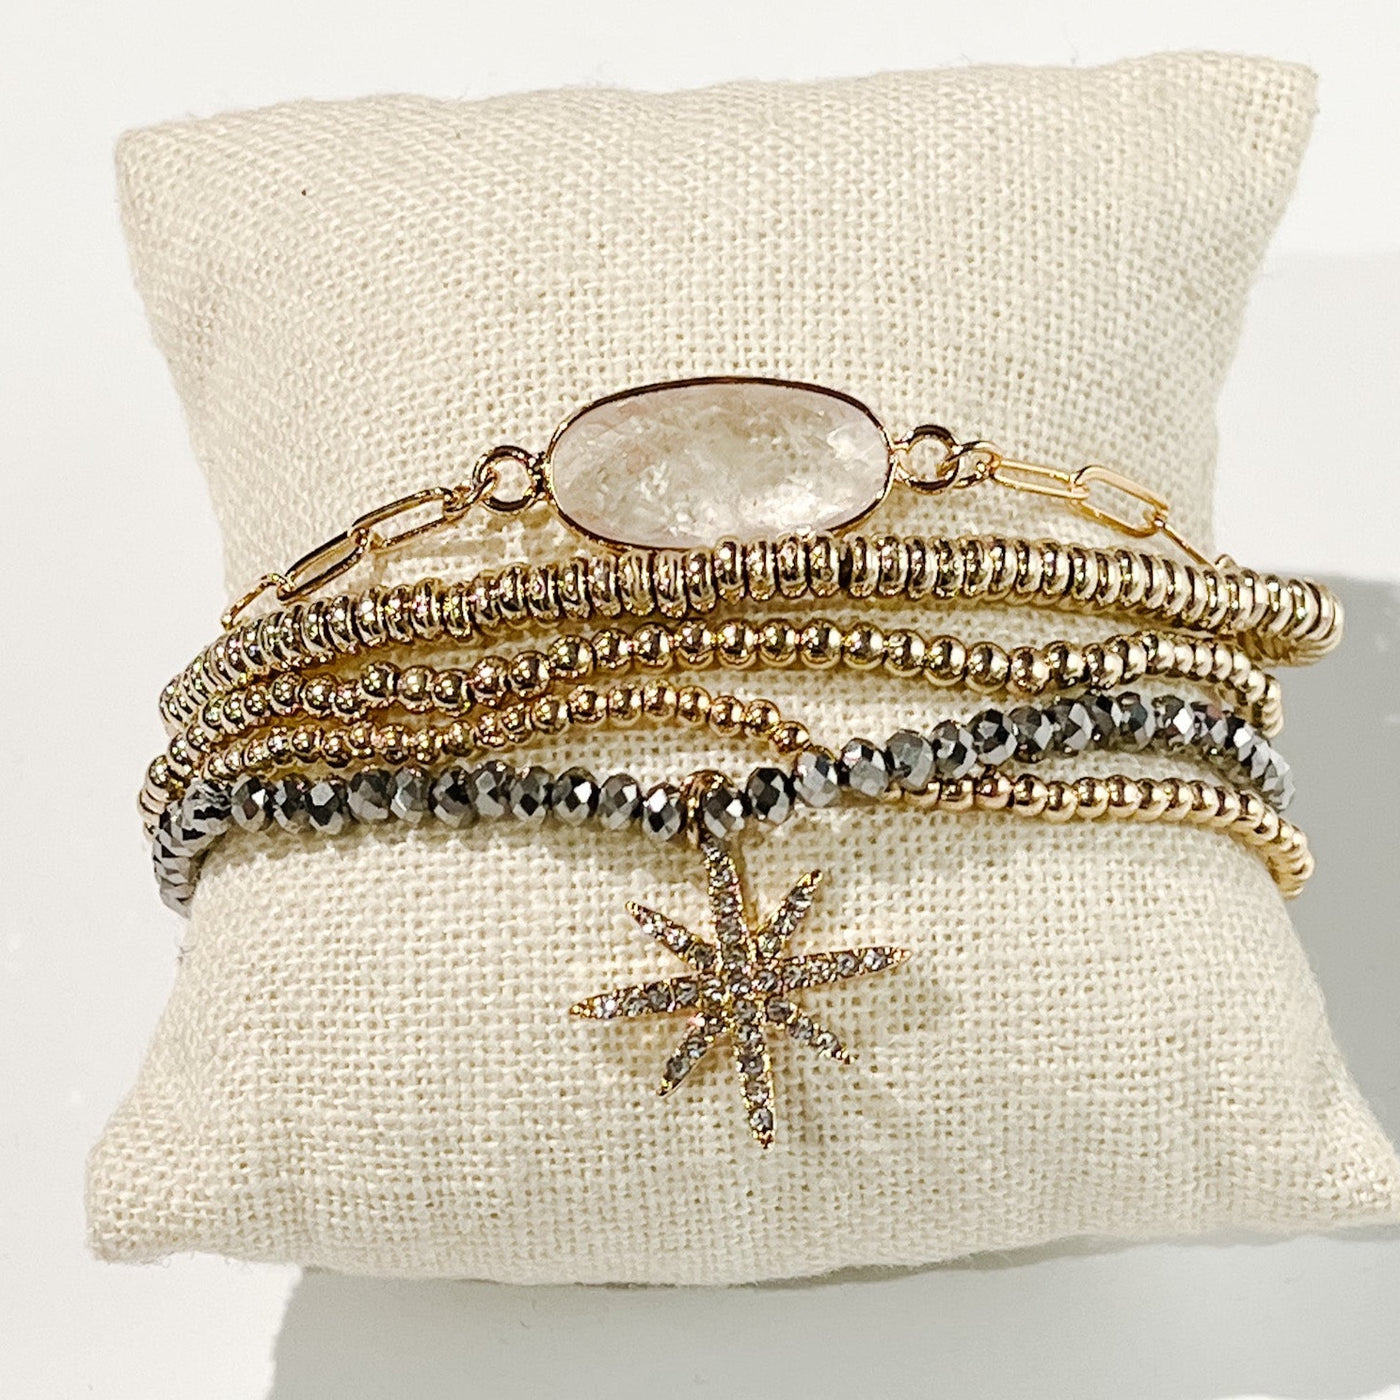 Bracelet, Callum - Danshire Market and Design , gold worn bracelet with clear pendant and starburst charm